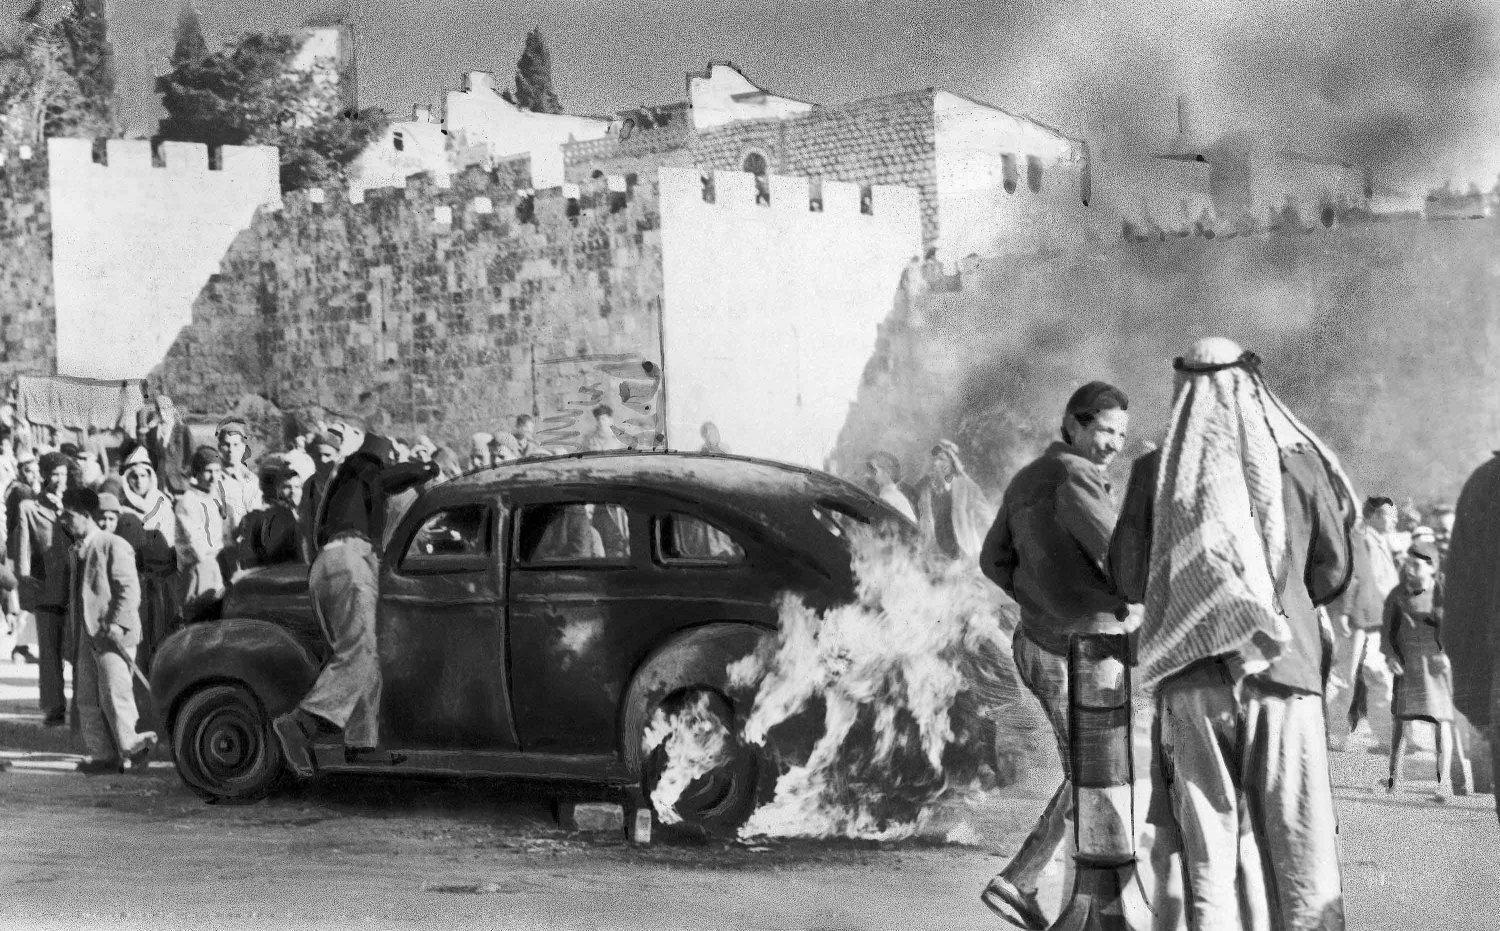 A Jewish taxi is set ablaze by Arab Palestinians near the Damascus Gate in Jerusalem, December 29, 1947